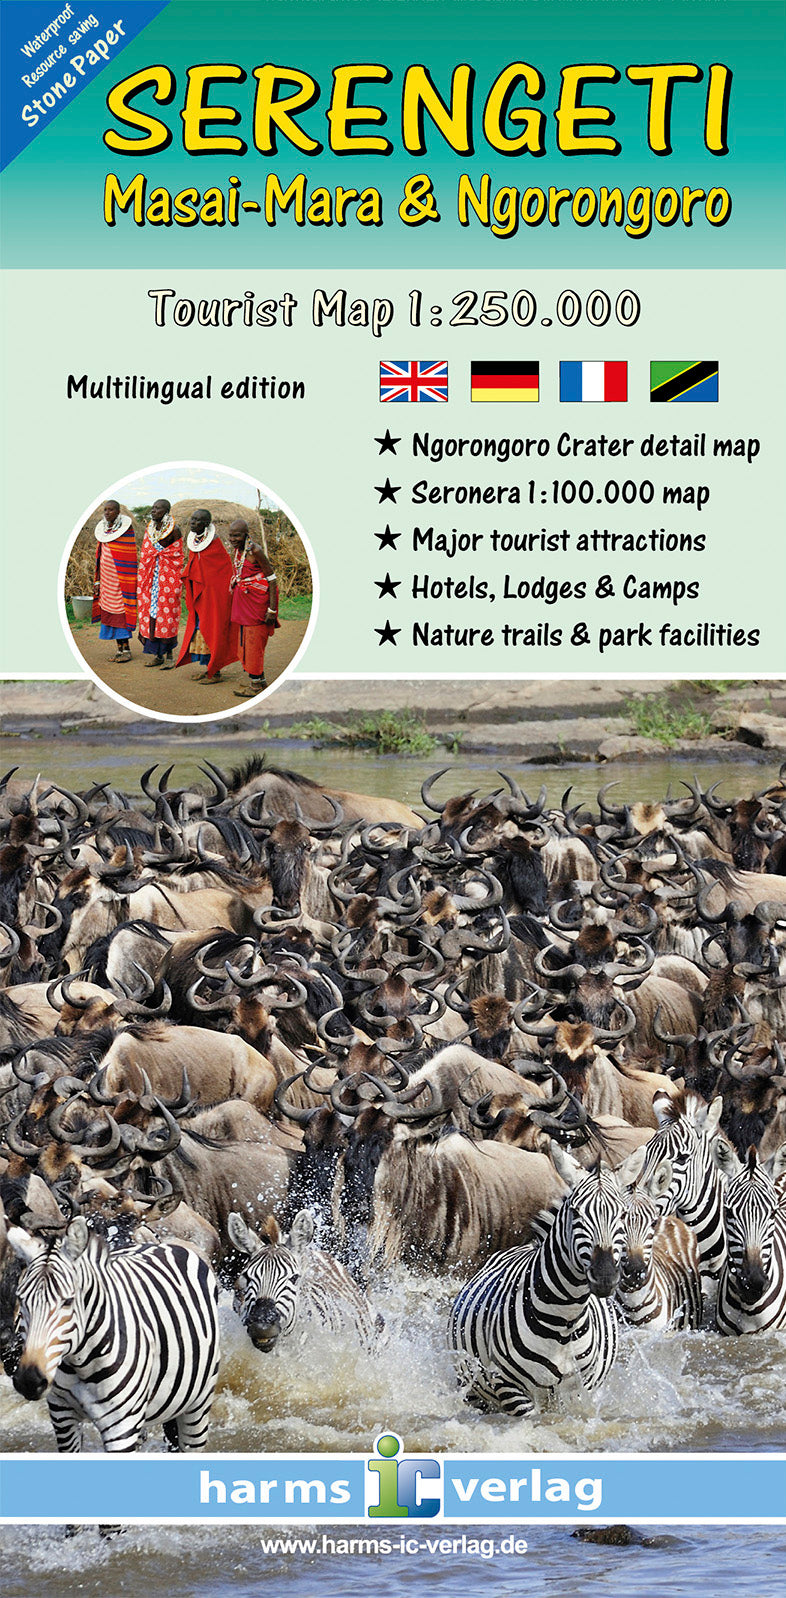 Tourist map - Serengeti, Masai-Mara, Ngorongoro (Tanzania) | Harms Verlag